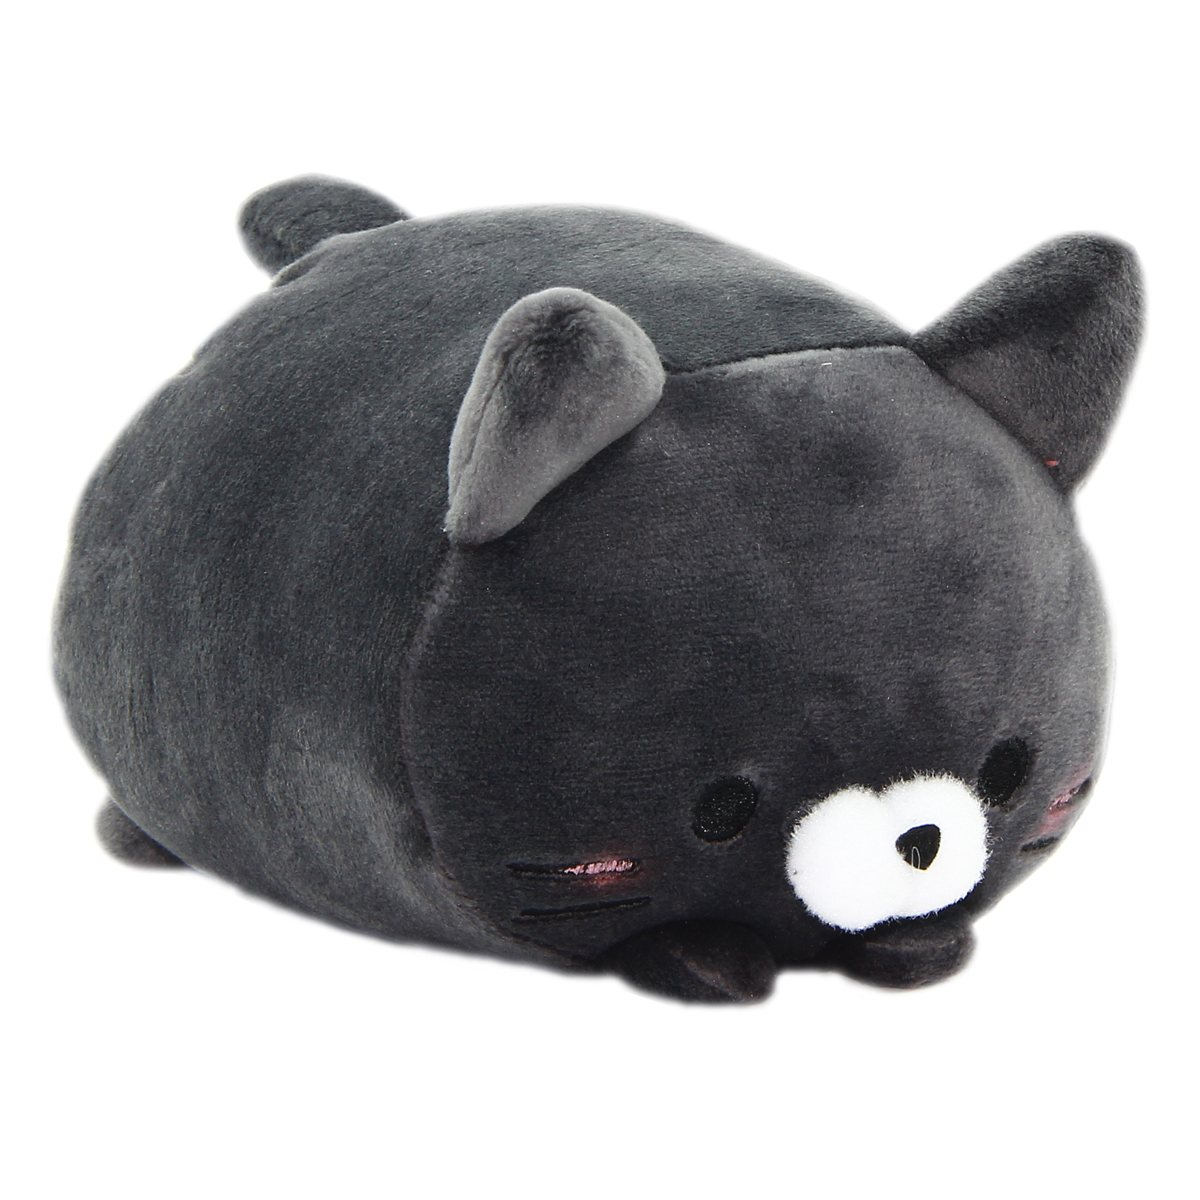 Plush Cat Squishy Toy Super Soft Stuffed Animal Neko Black